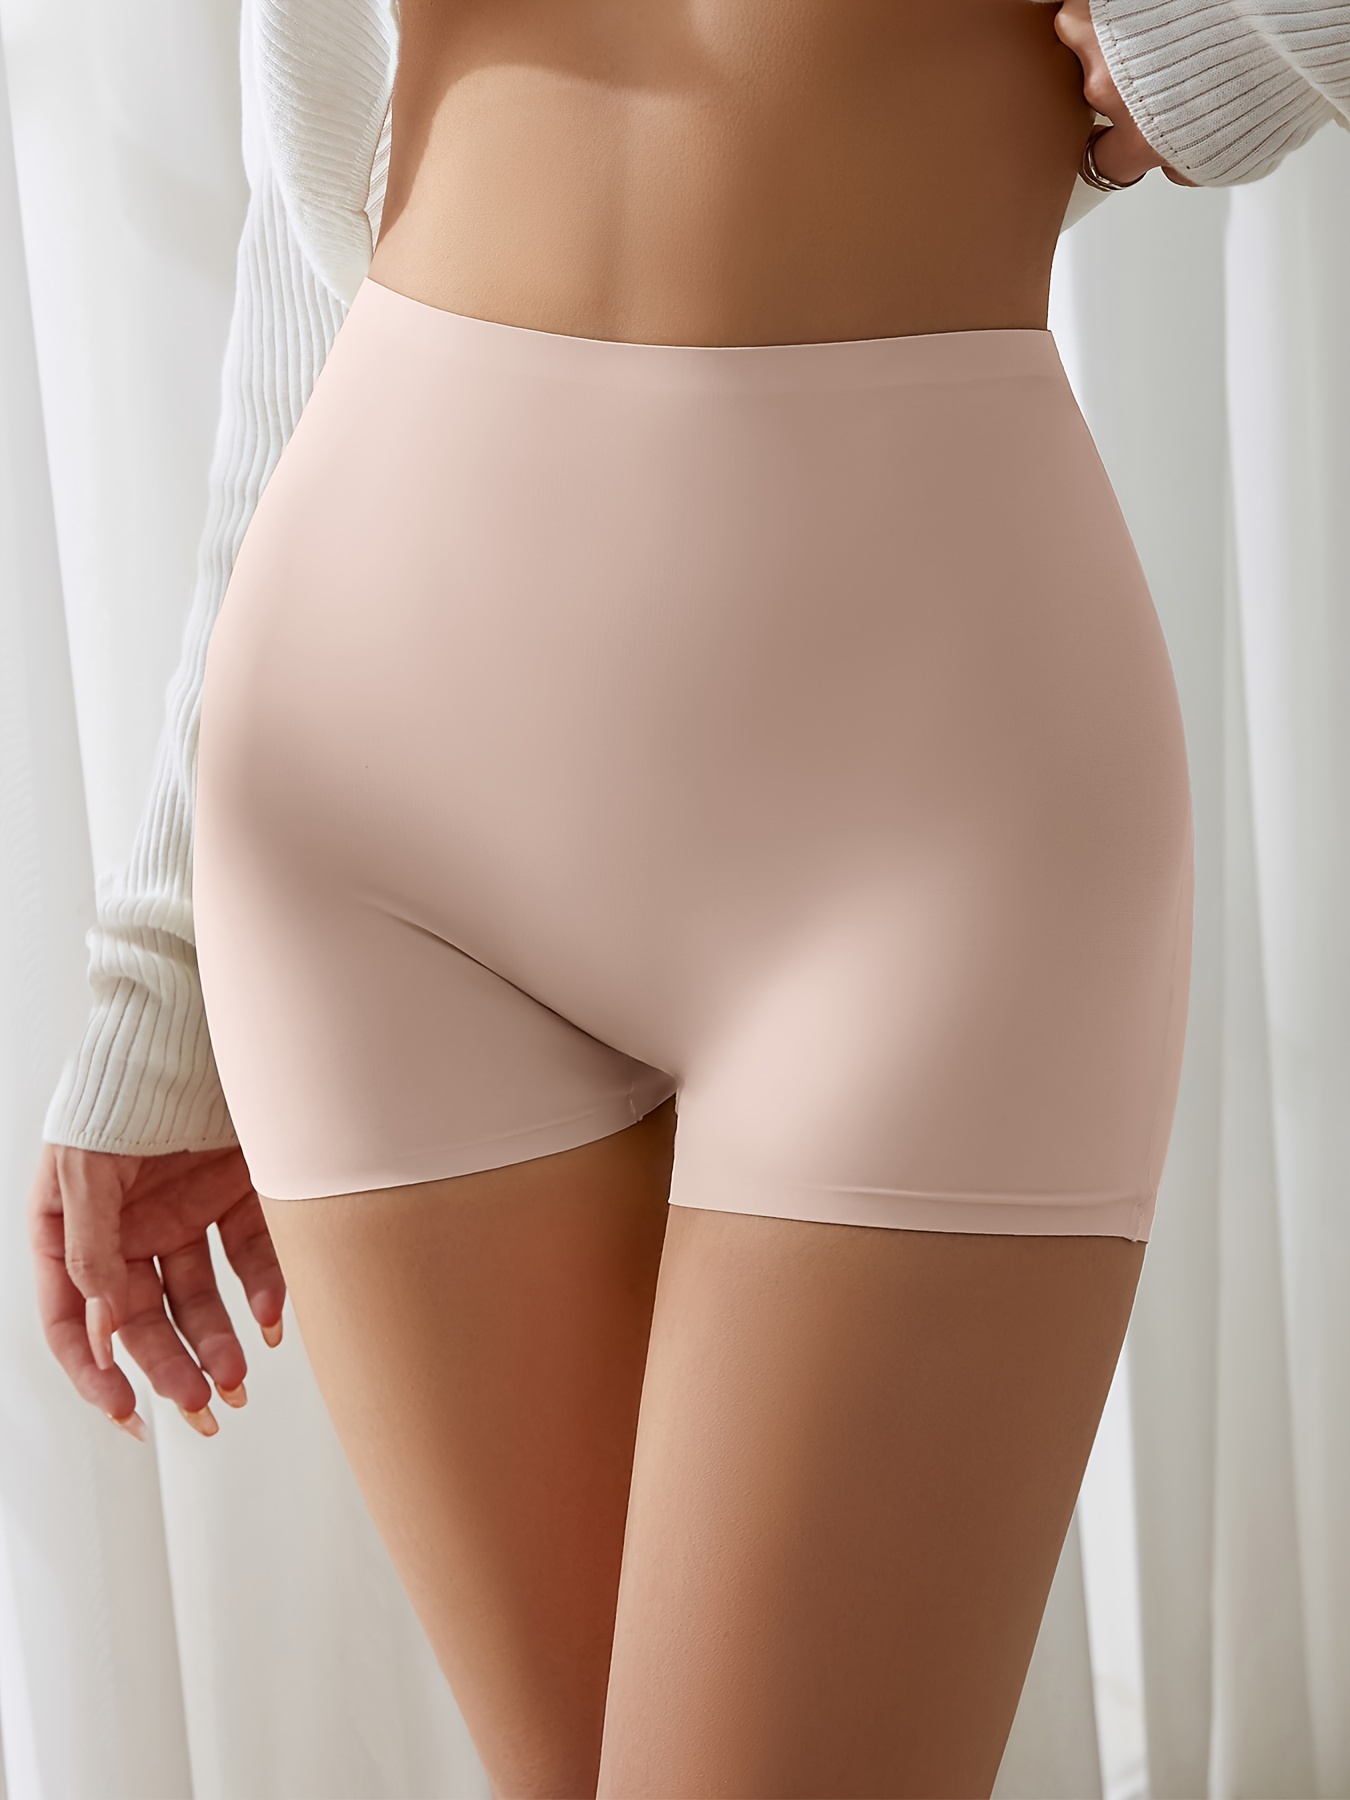 Women's Seamless Underwear - Comfortable Seamless Panties for